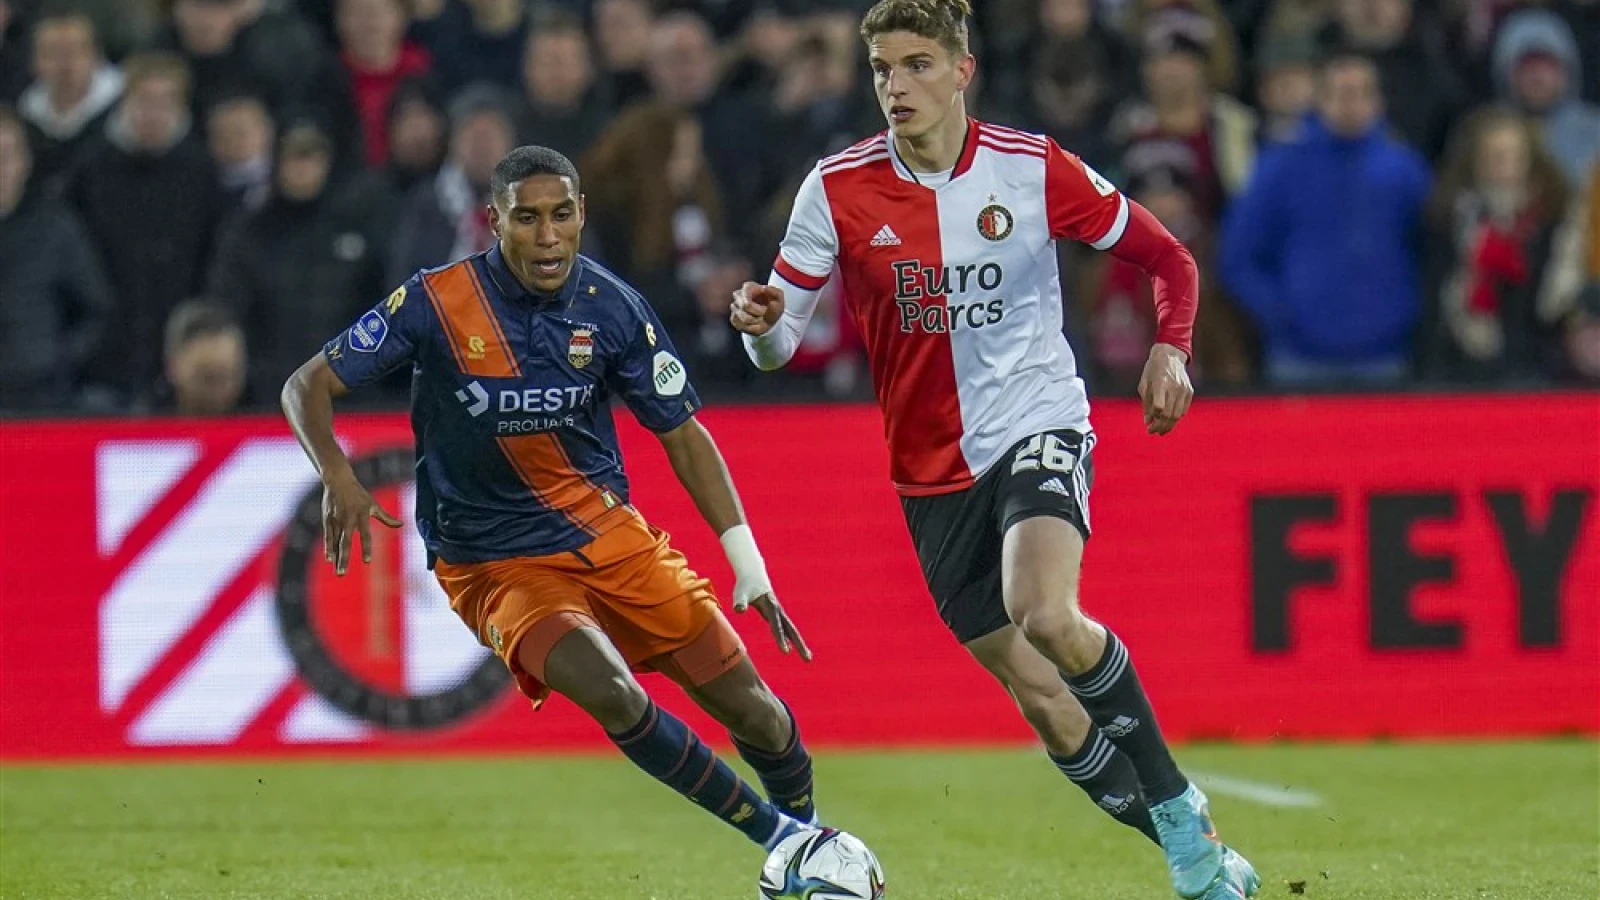 LIVE | Feyenoord - Willem II 2-0 | Einde wedstrijd